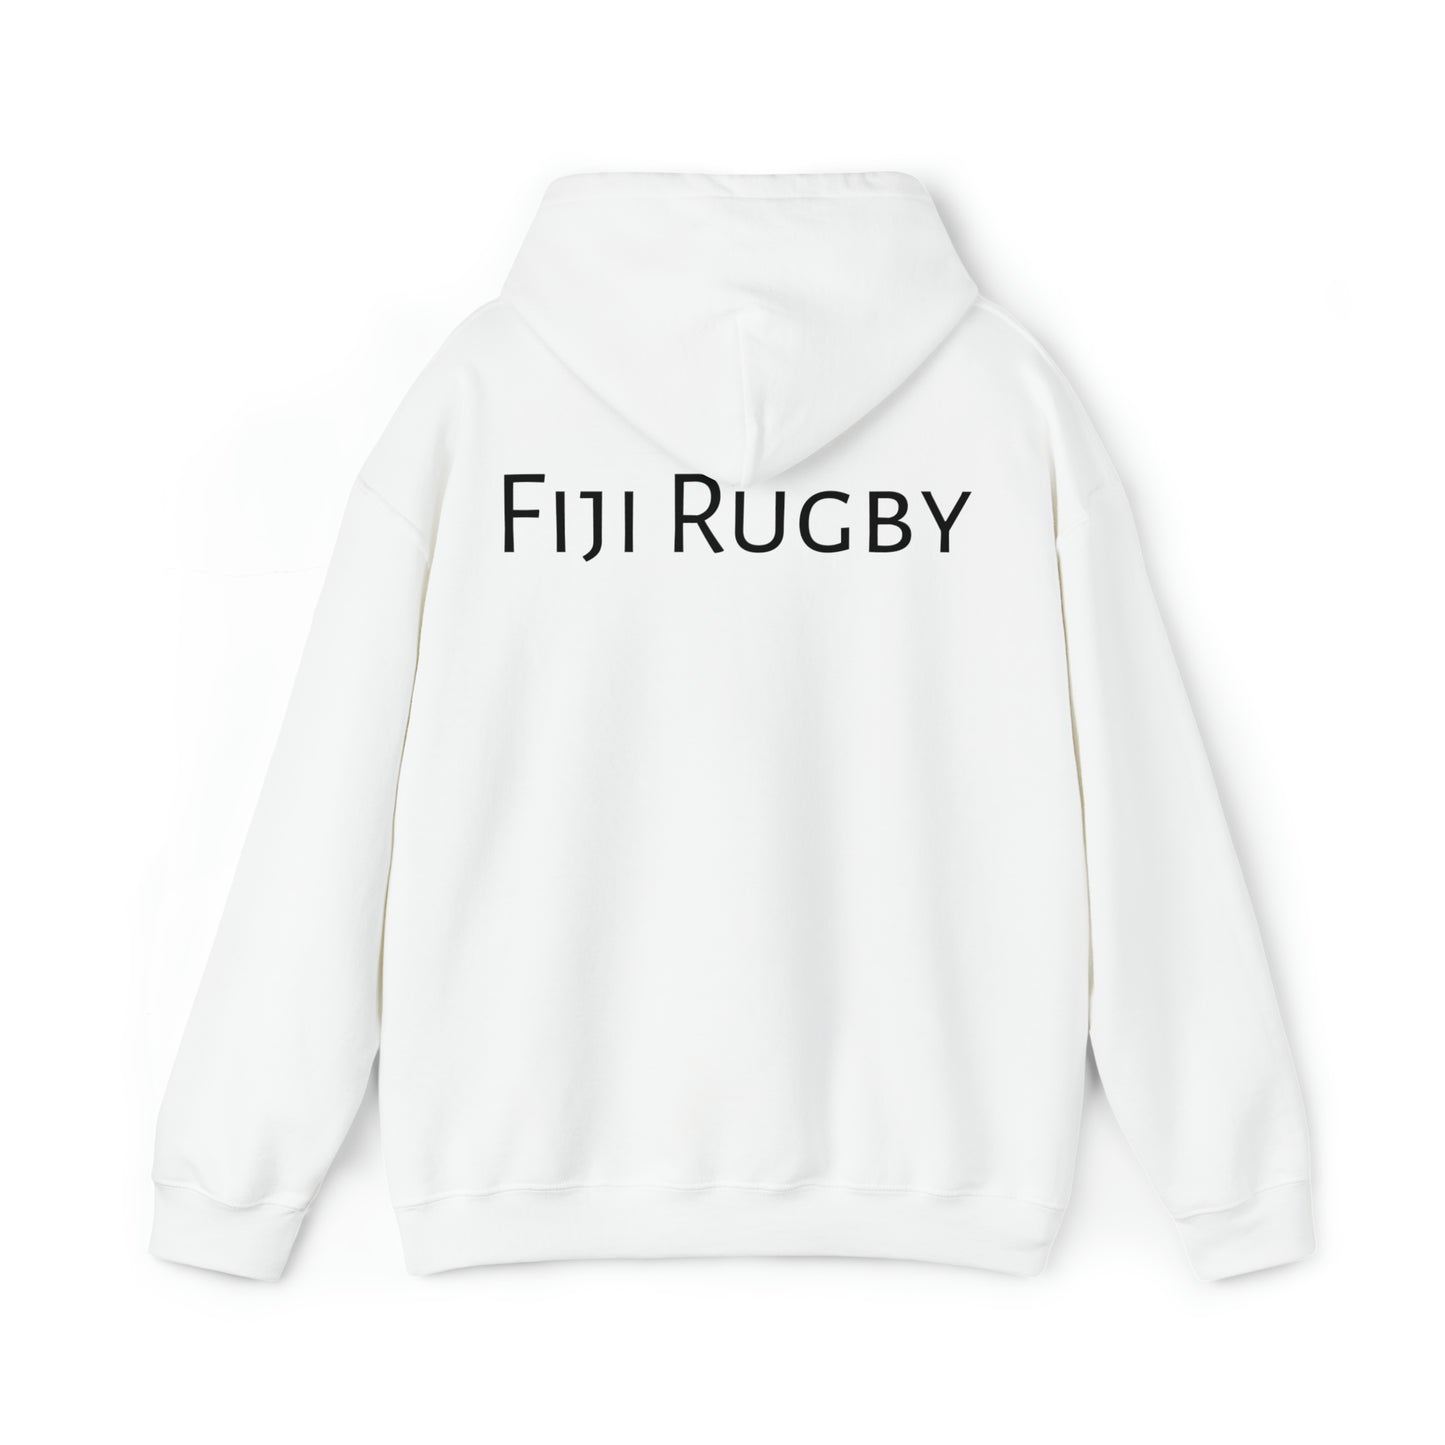 Happy Fiji - light hoodies